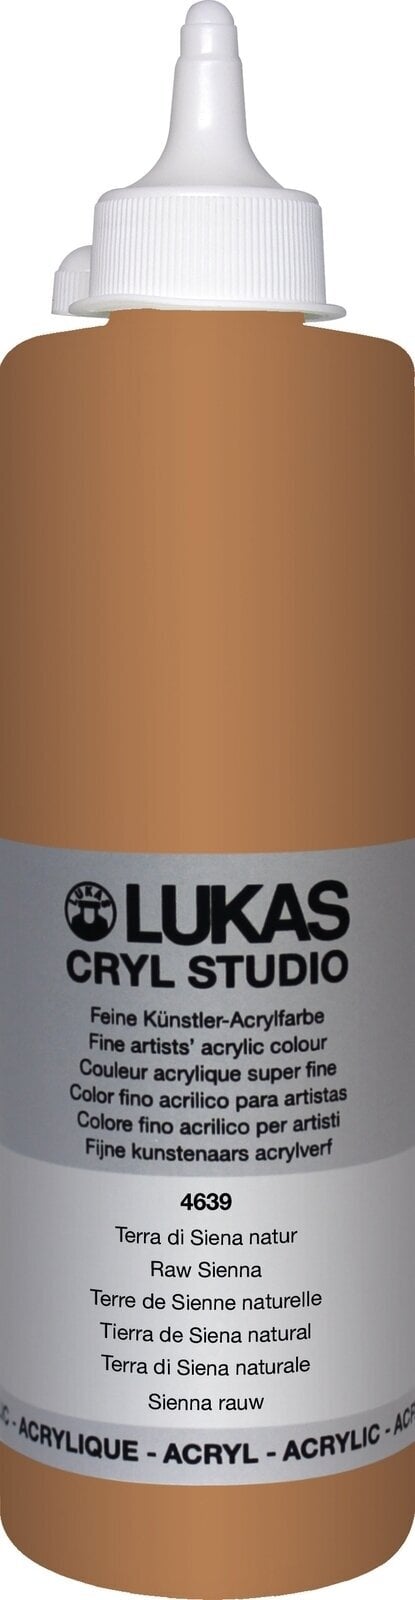 Peinture acrylique Lukas Cryl Studio Acrylic Paint Plastic Bottle Peinture acrylique Raw Sienna 500 ml 1 pc